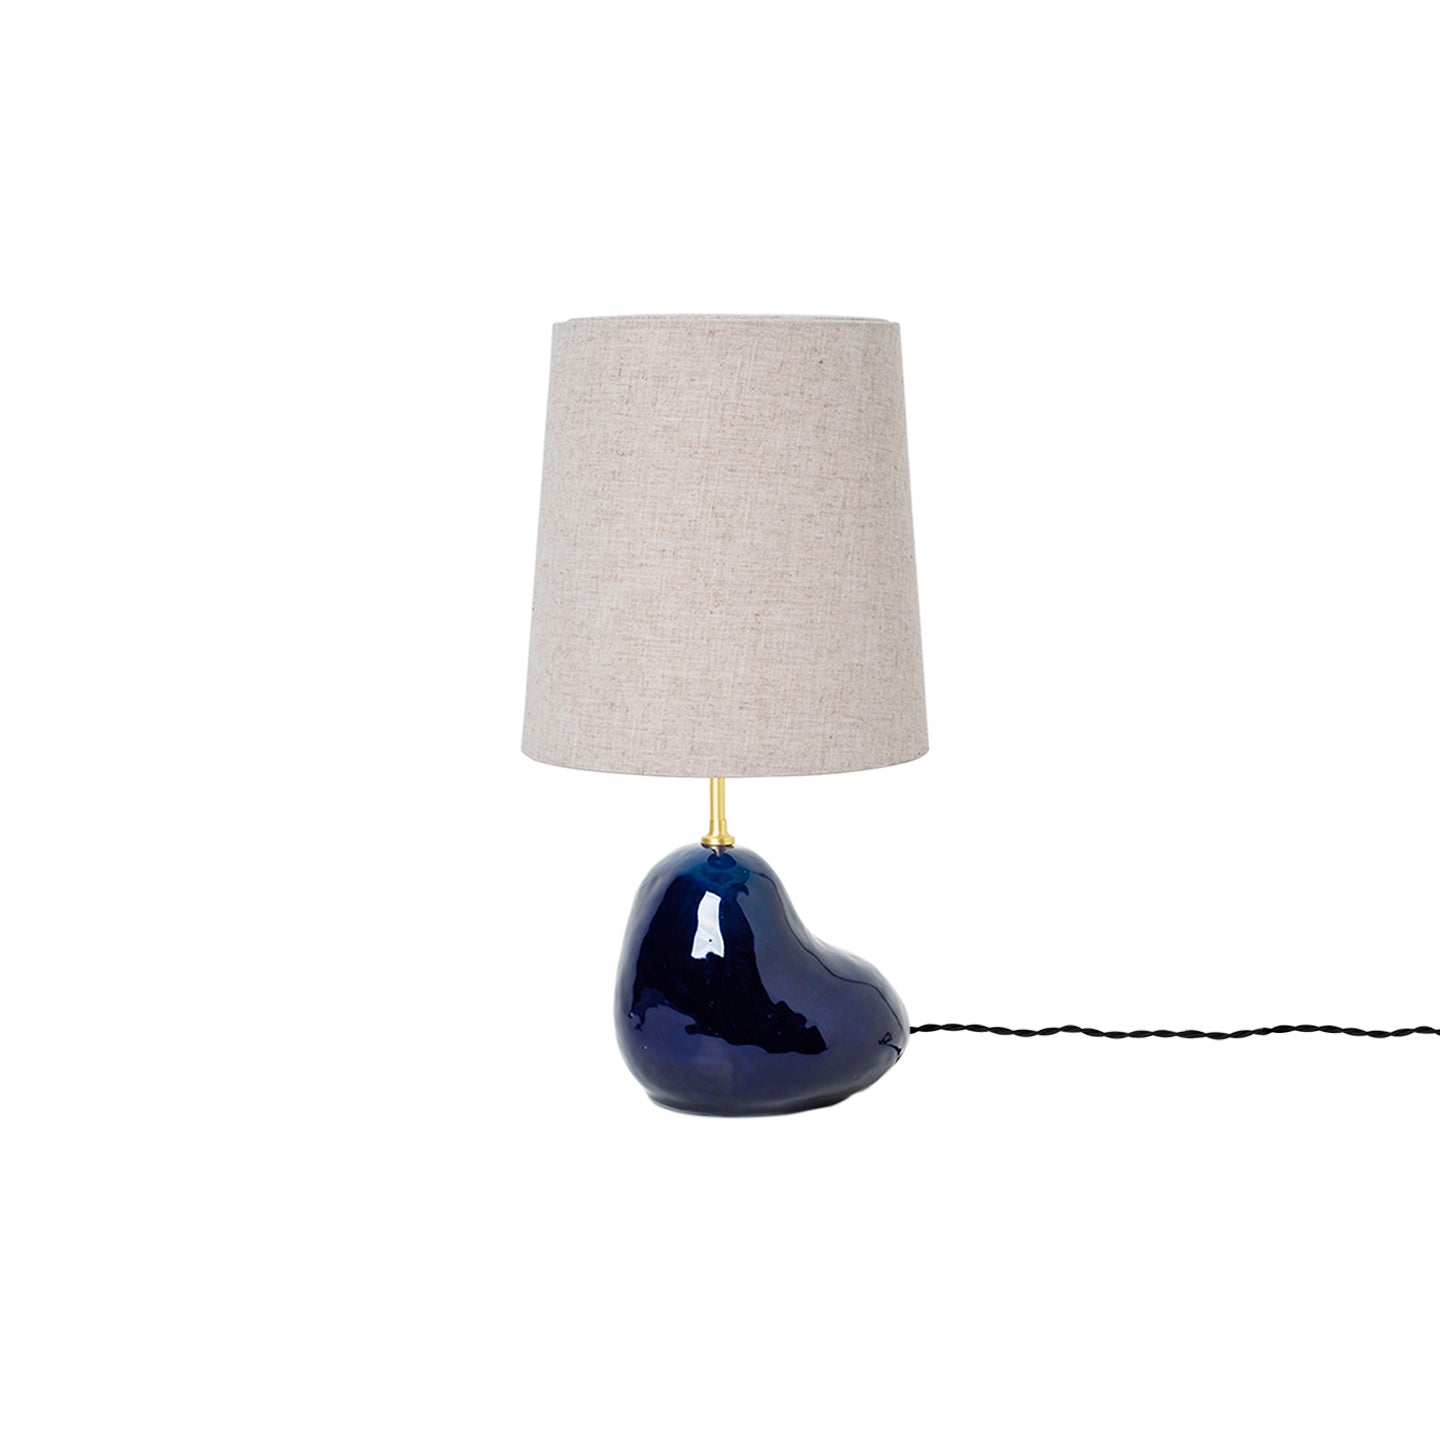 Hebe Lamp: Short + Natural + Deep Blue